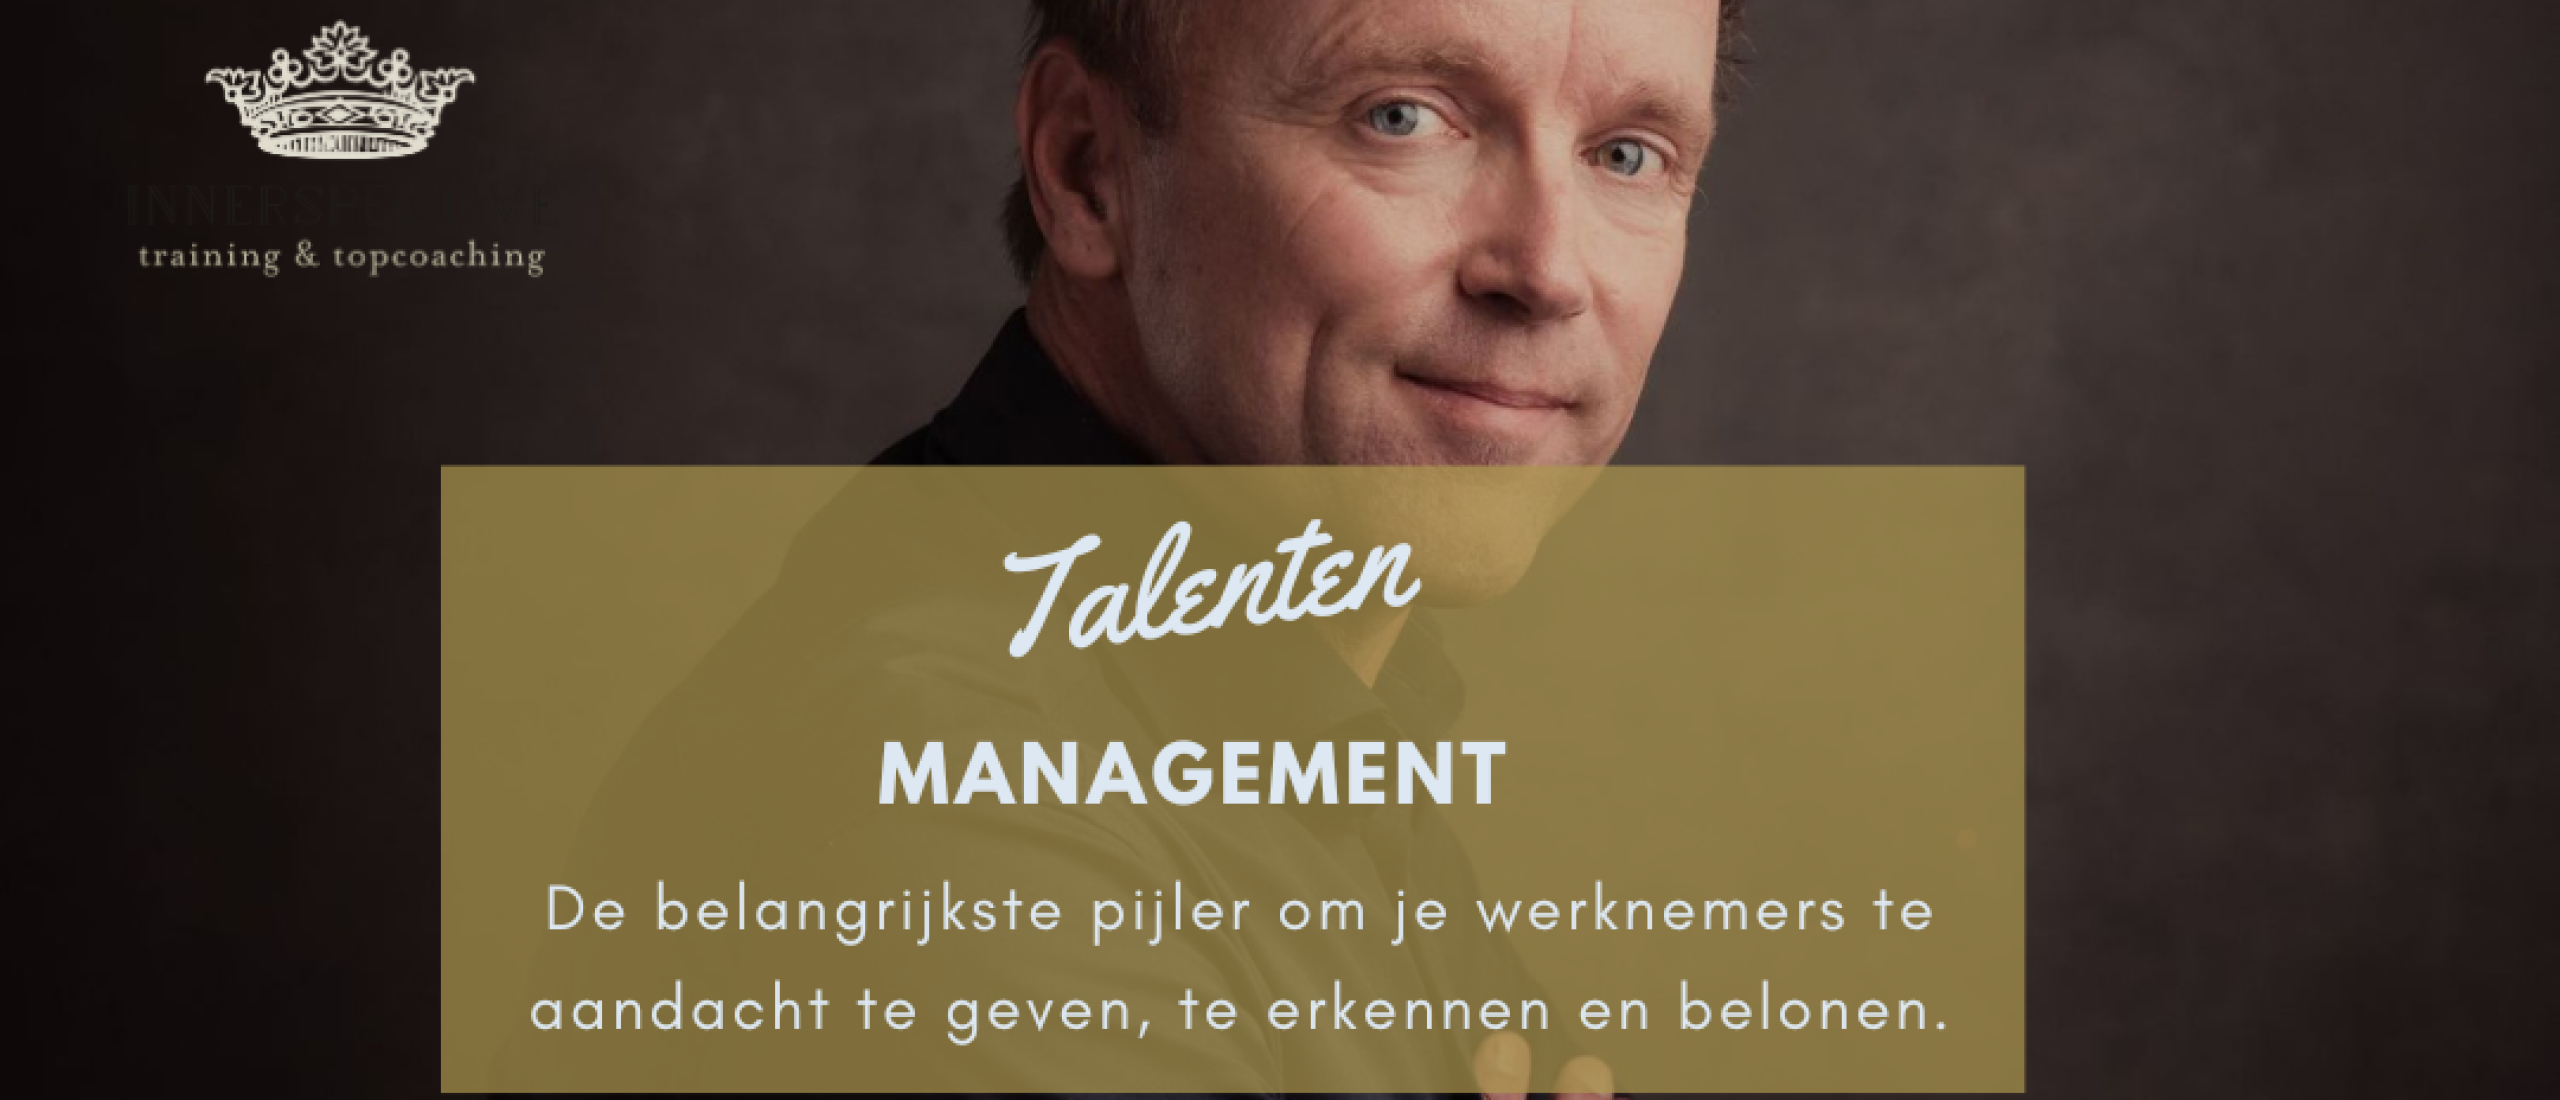 Talentenmanagement